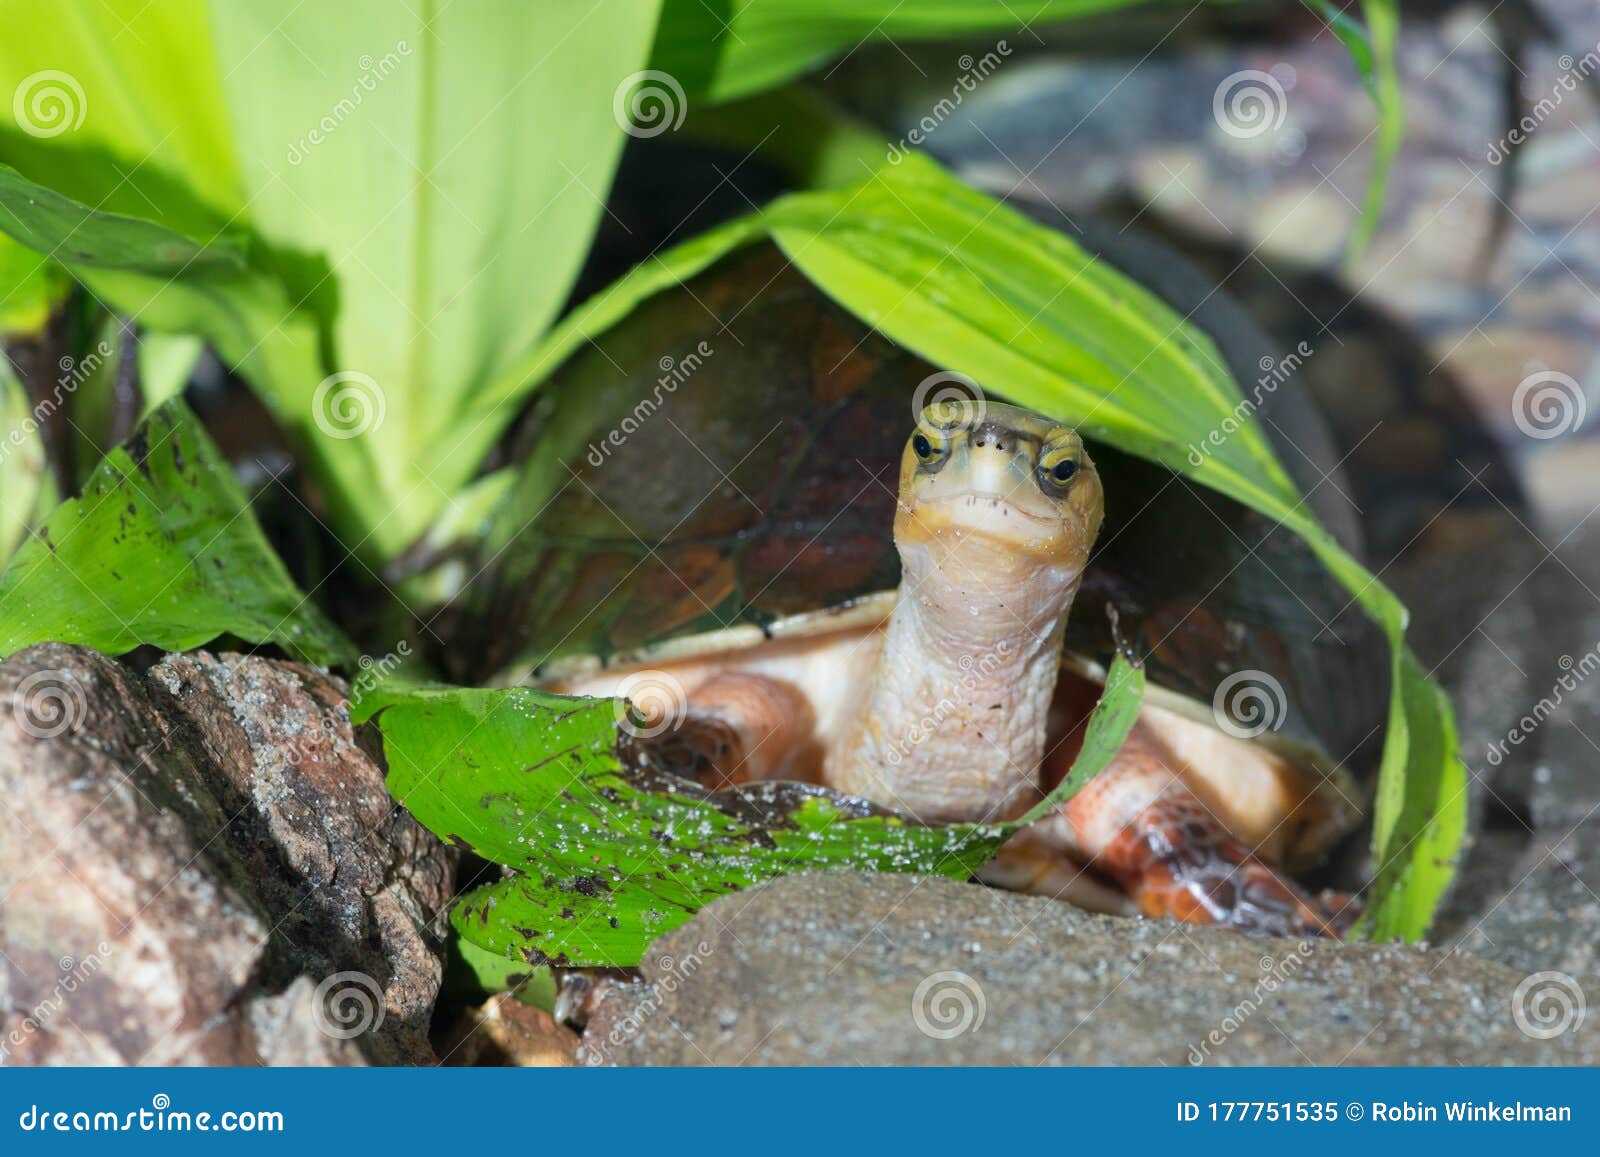 mccord`s box turtle among vegetation 2